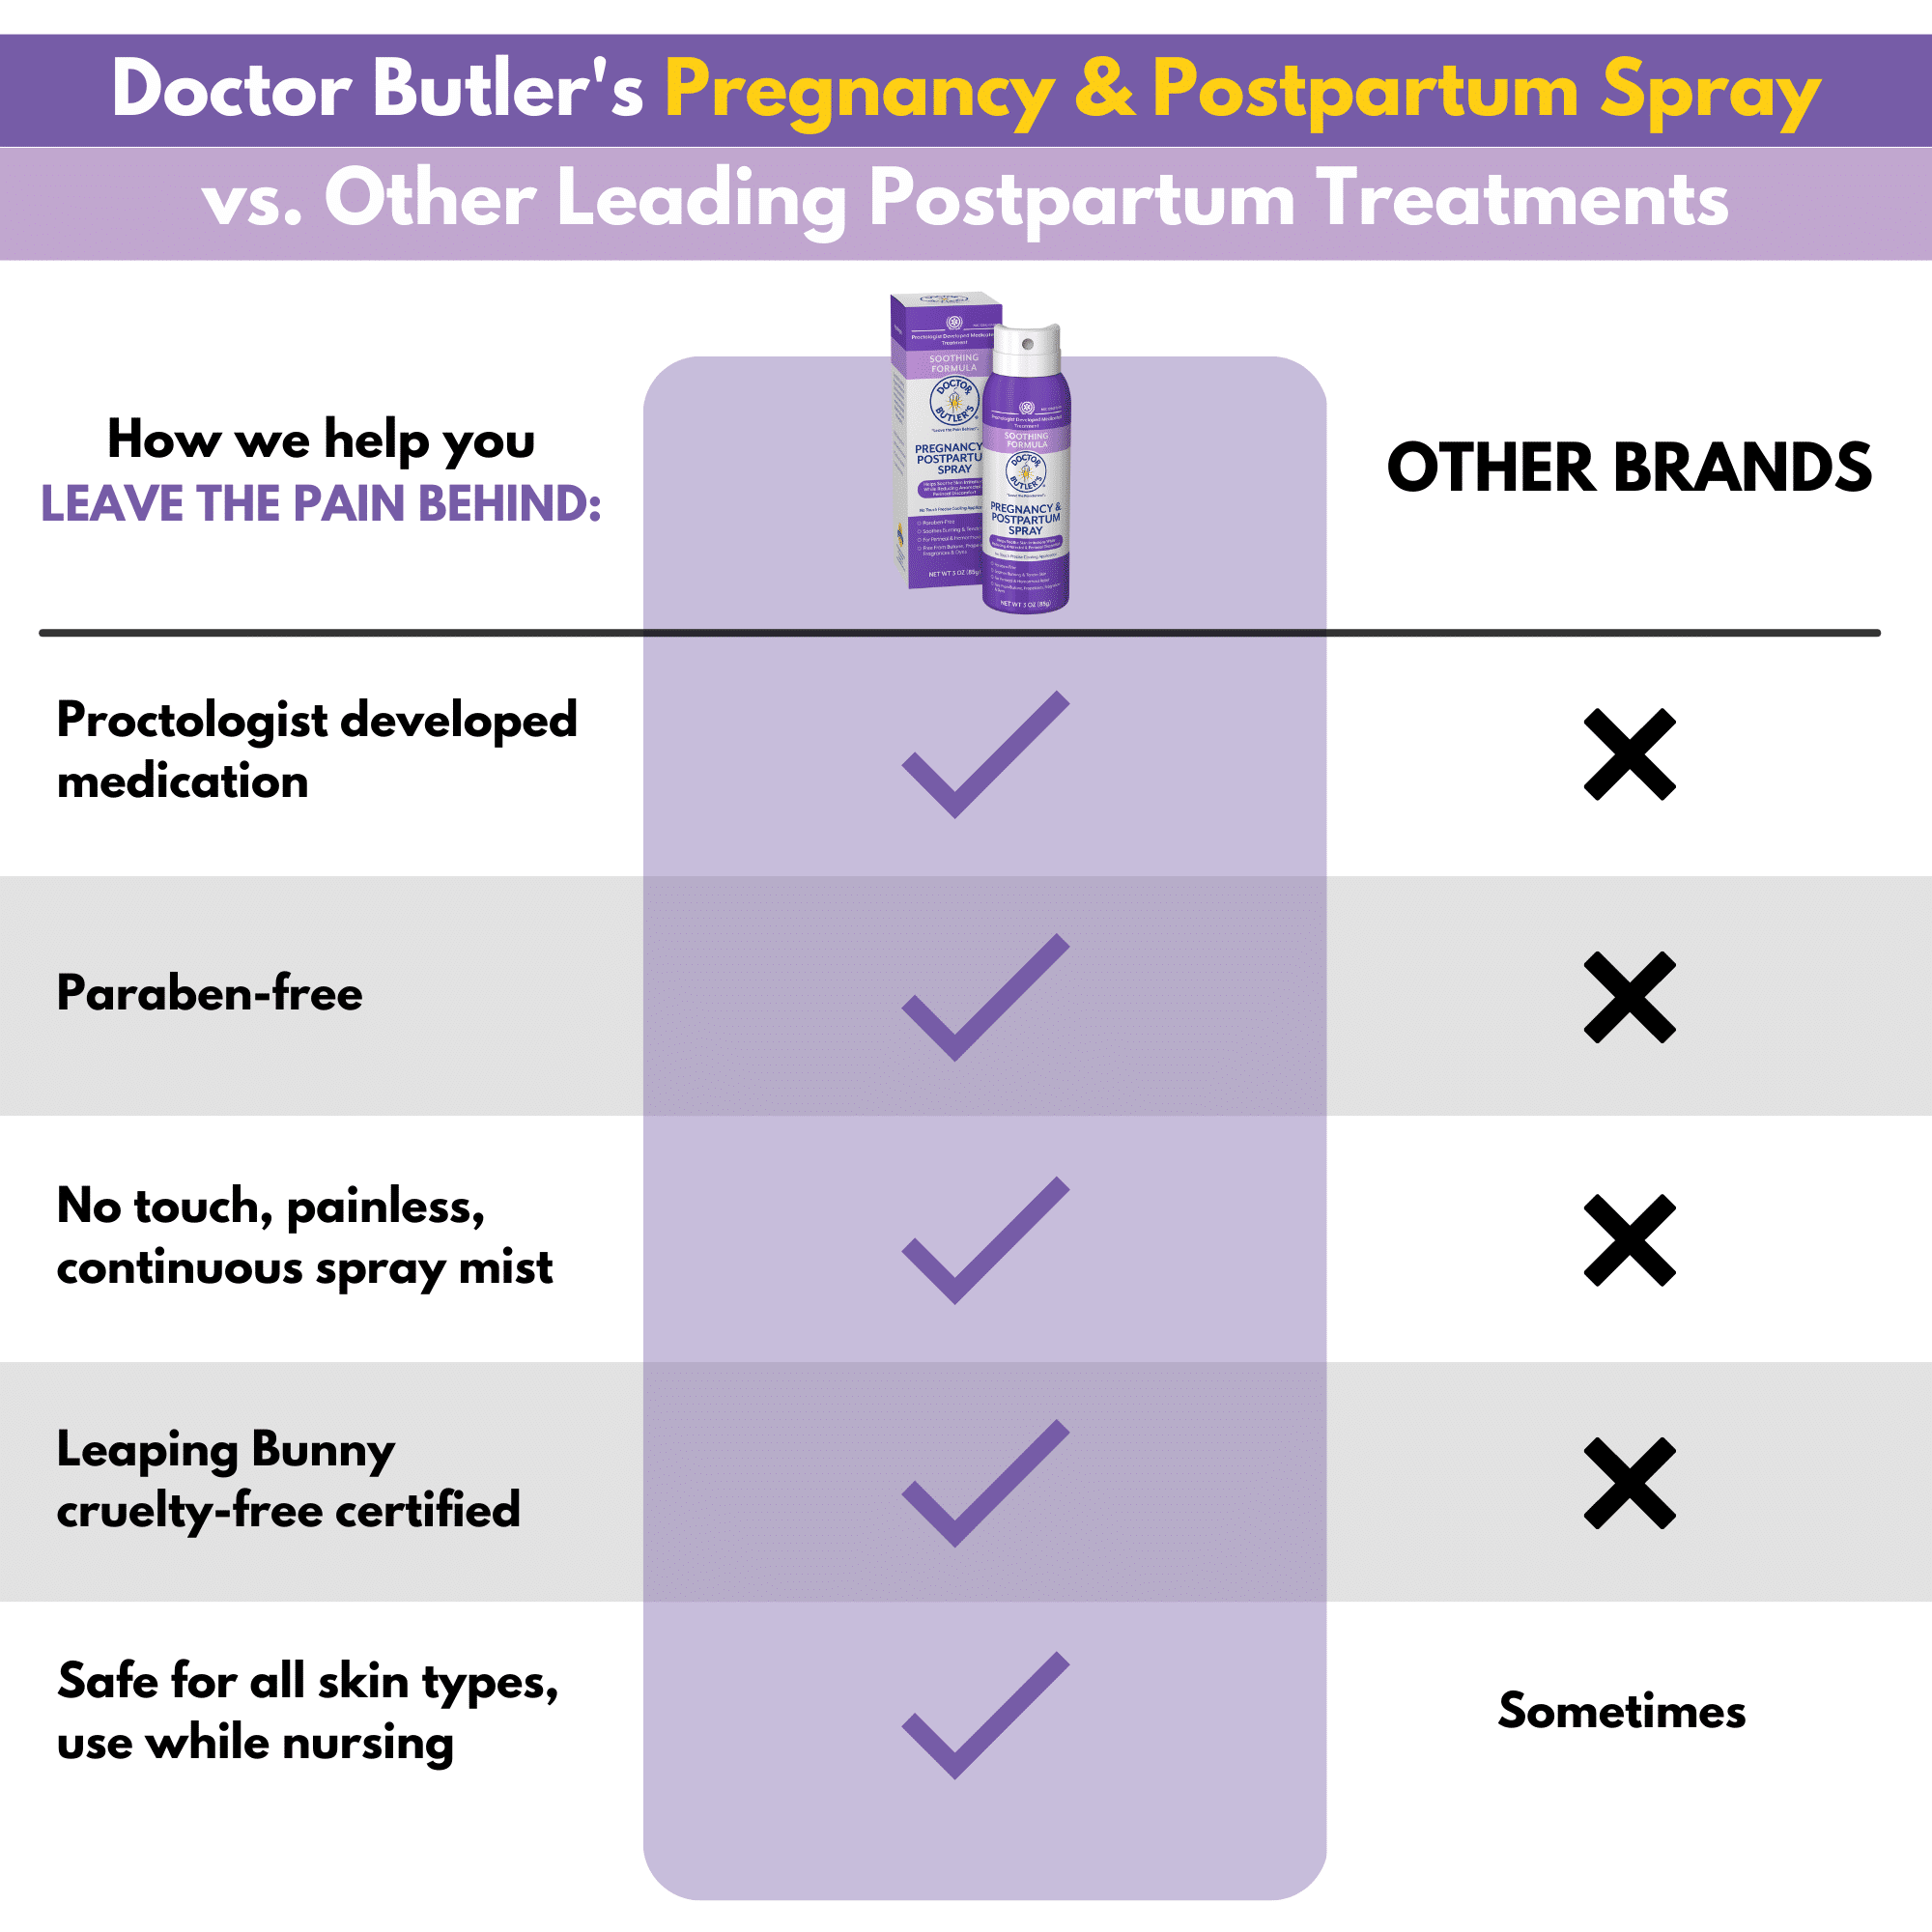 Pregnancy & Postpartum Perineal Spray